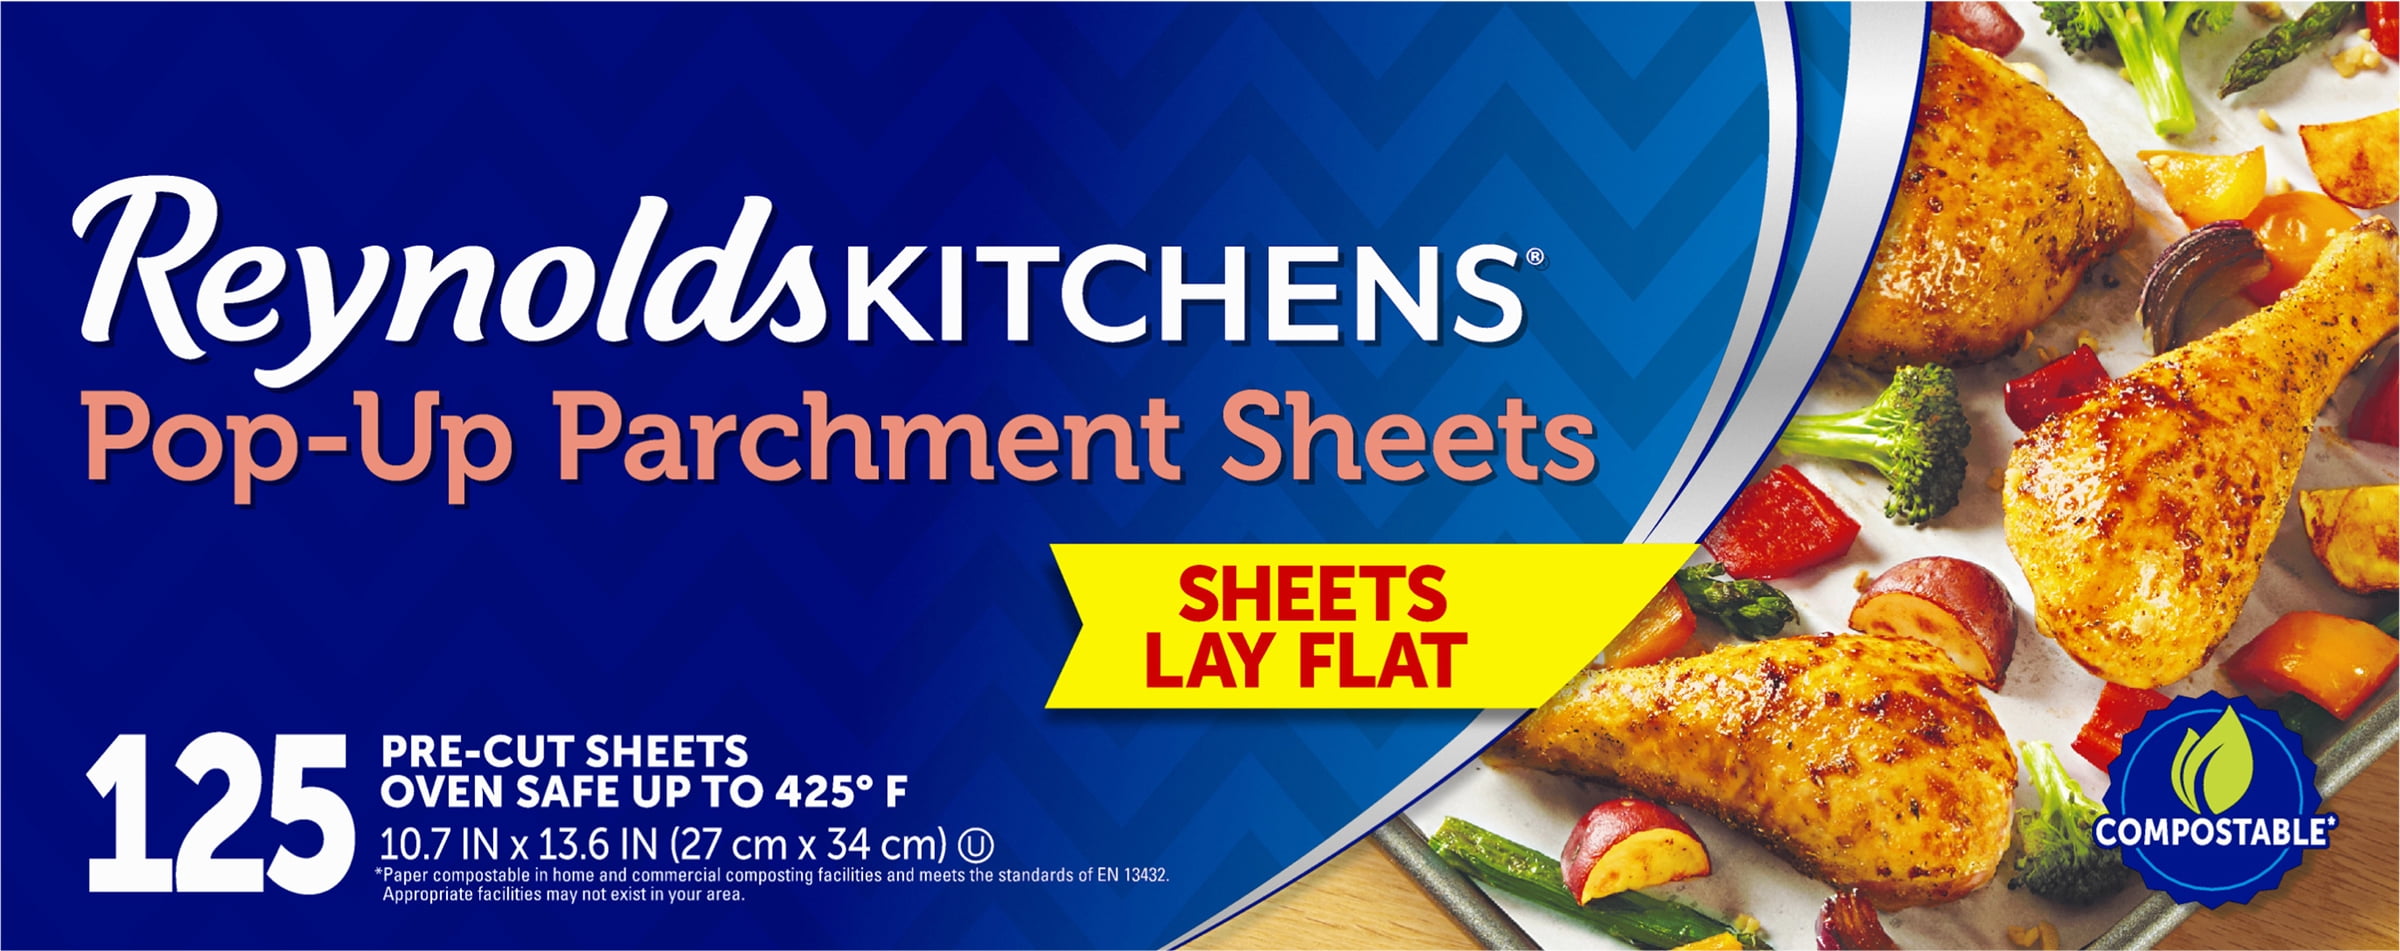 Reynolds Kitchens Parchment Sheets, Pop-Up, Pre-Cut - 125 sheets